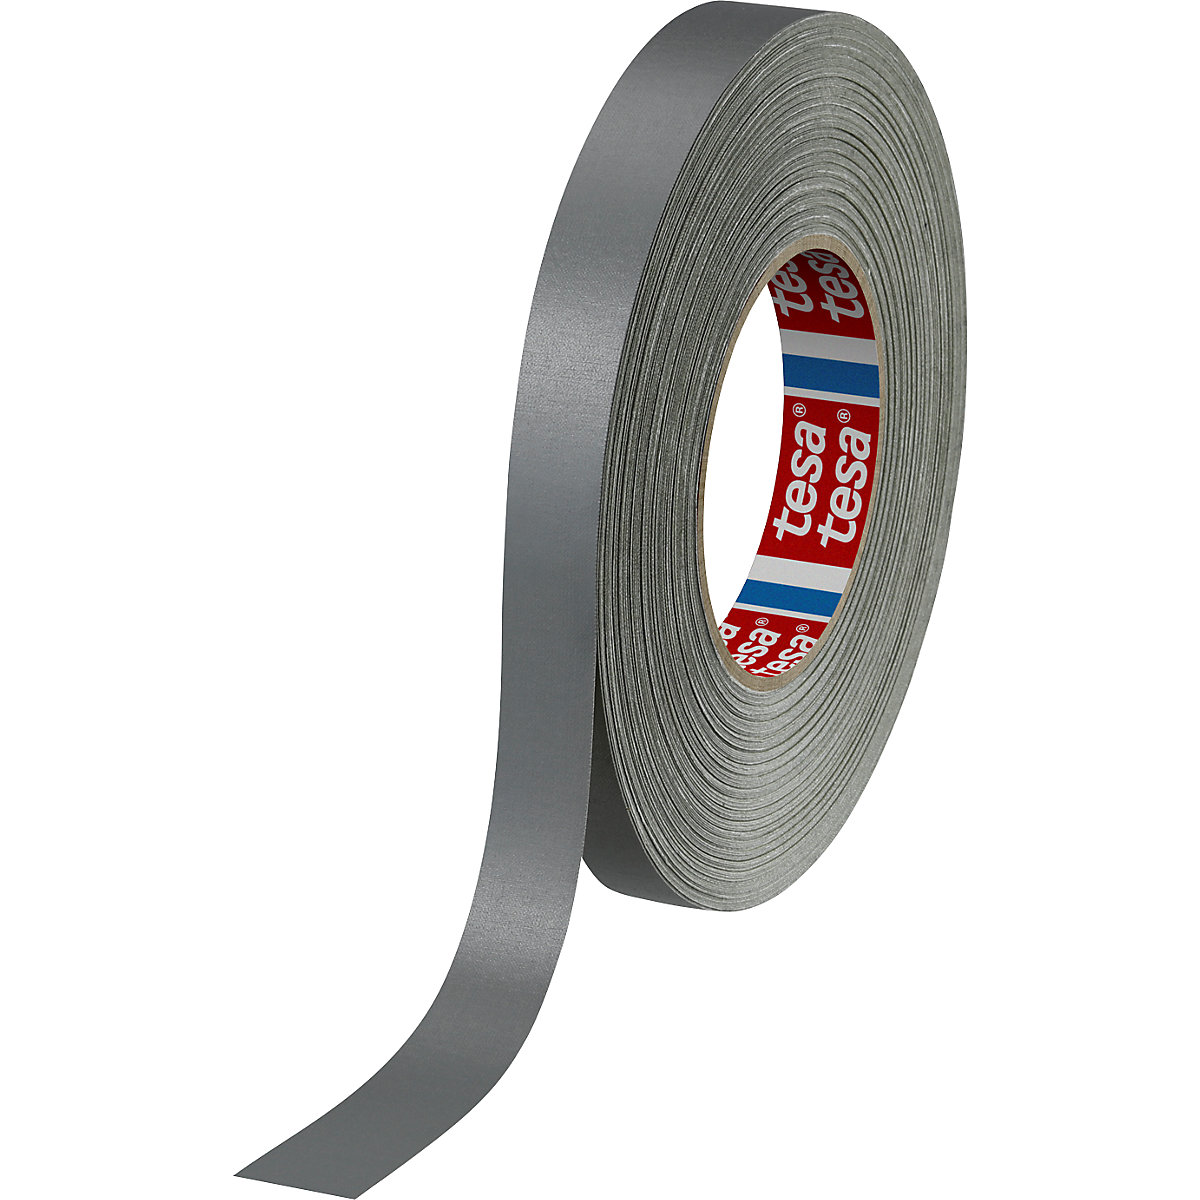 Fabric tape – tesa, tesaband® 4651 premium, pack of 48 rolls, silver, tape width 19 mm-1